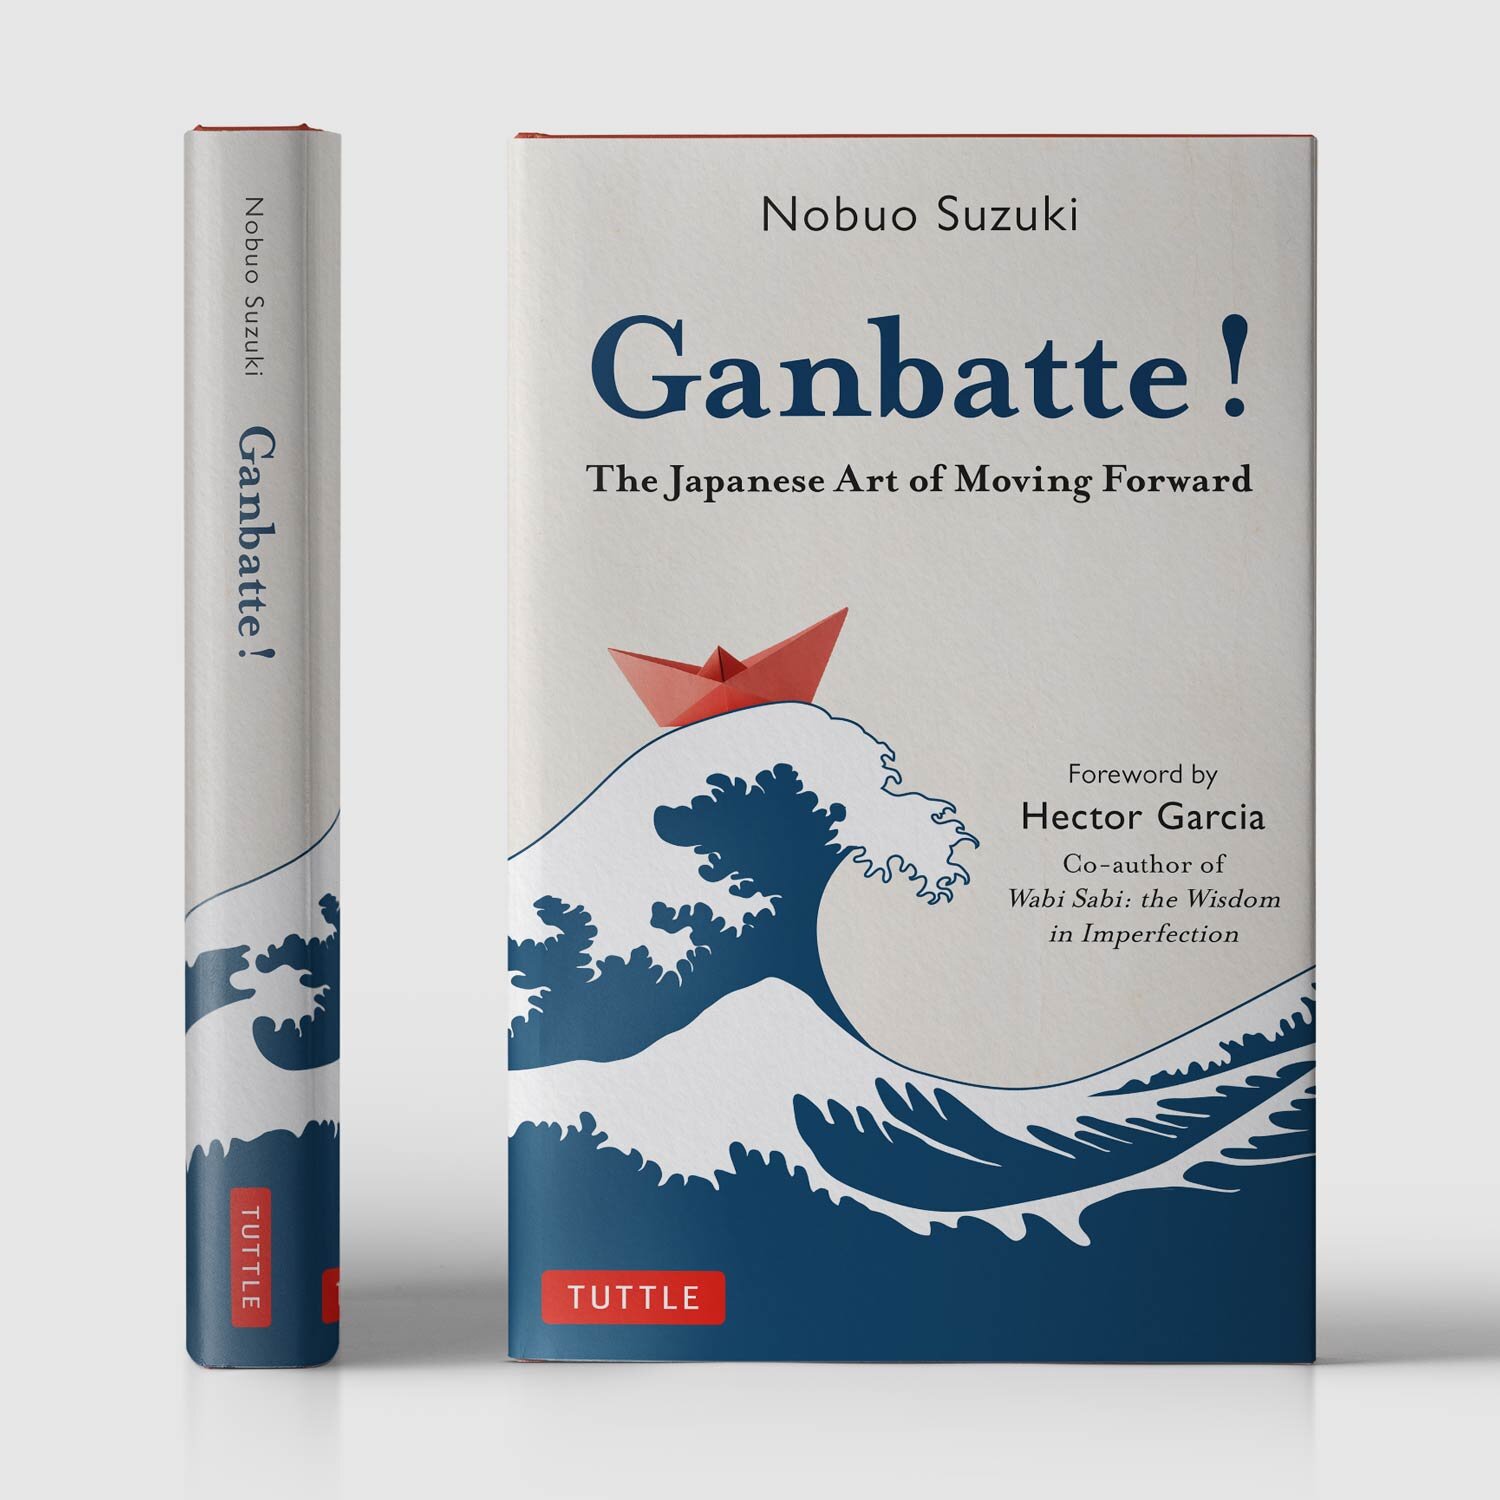 Ganbatte!: The Japanese Art of Always Moving Forward [Book]